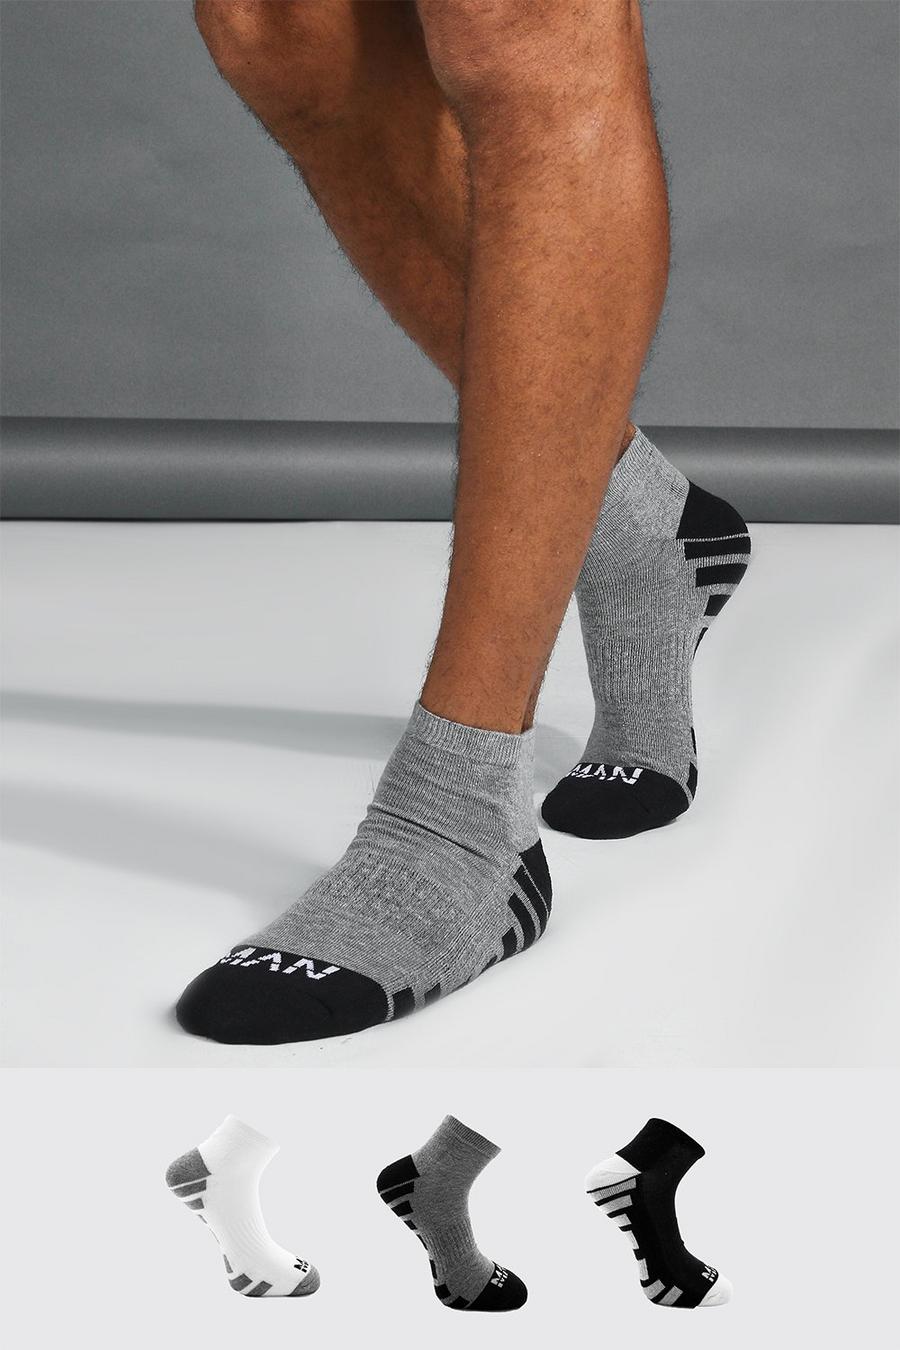 Calzini alla caviglia Man Dash Activewear - set di 3 paia, Multi image number 1